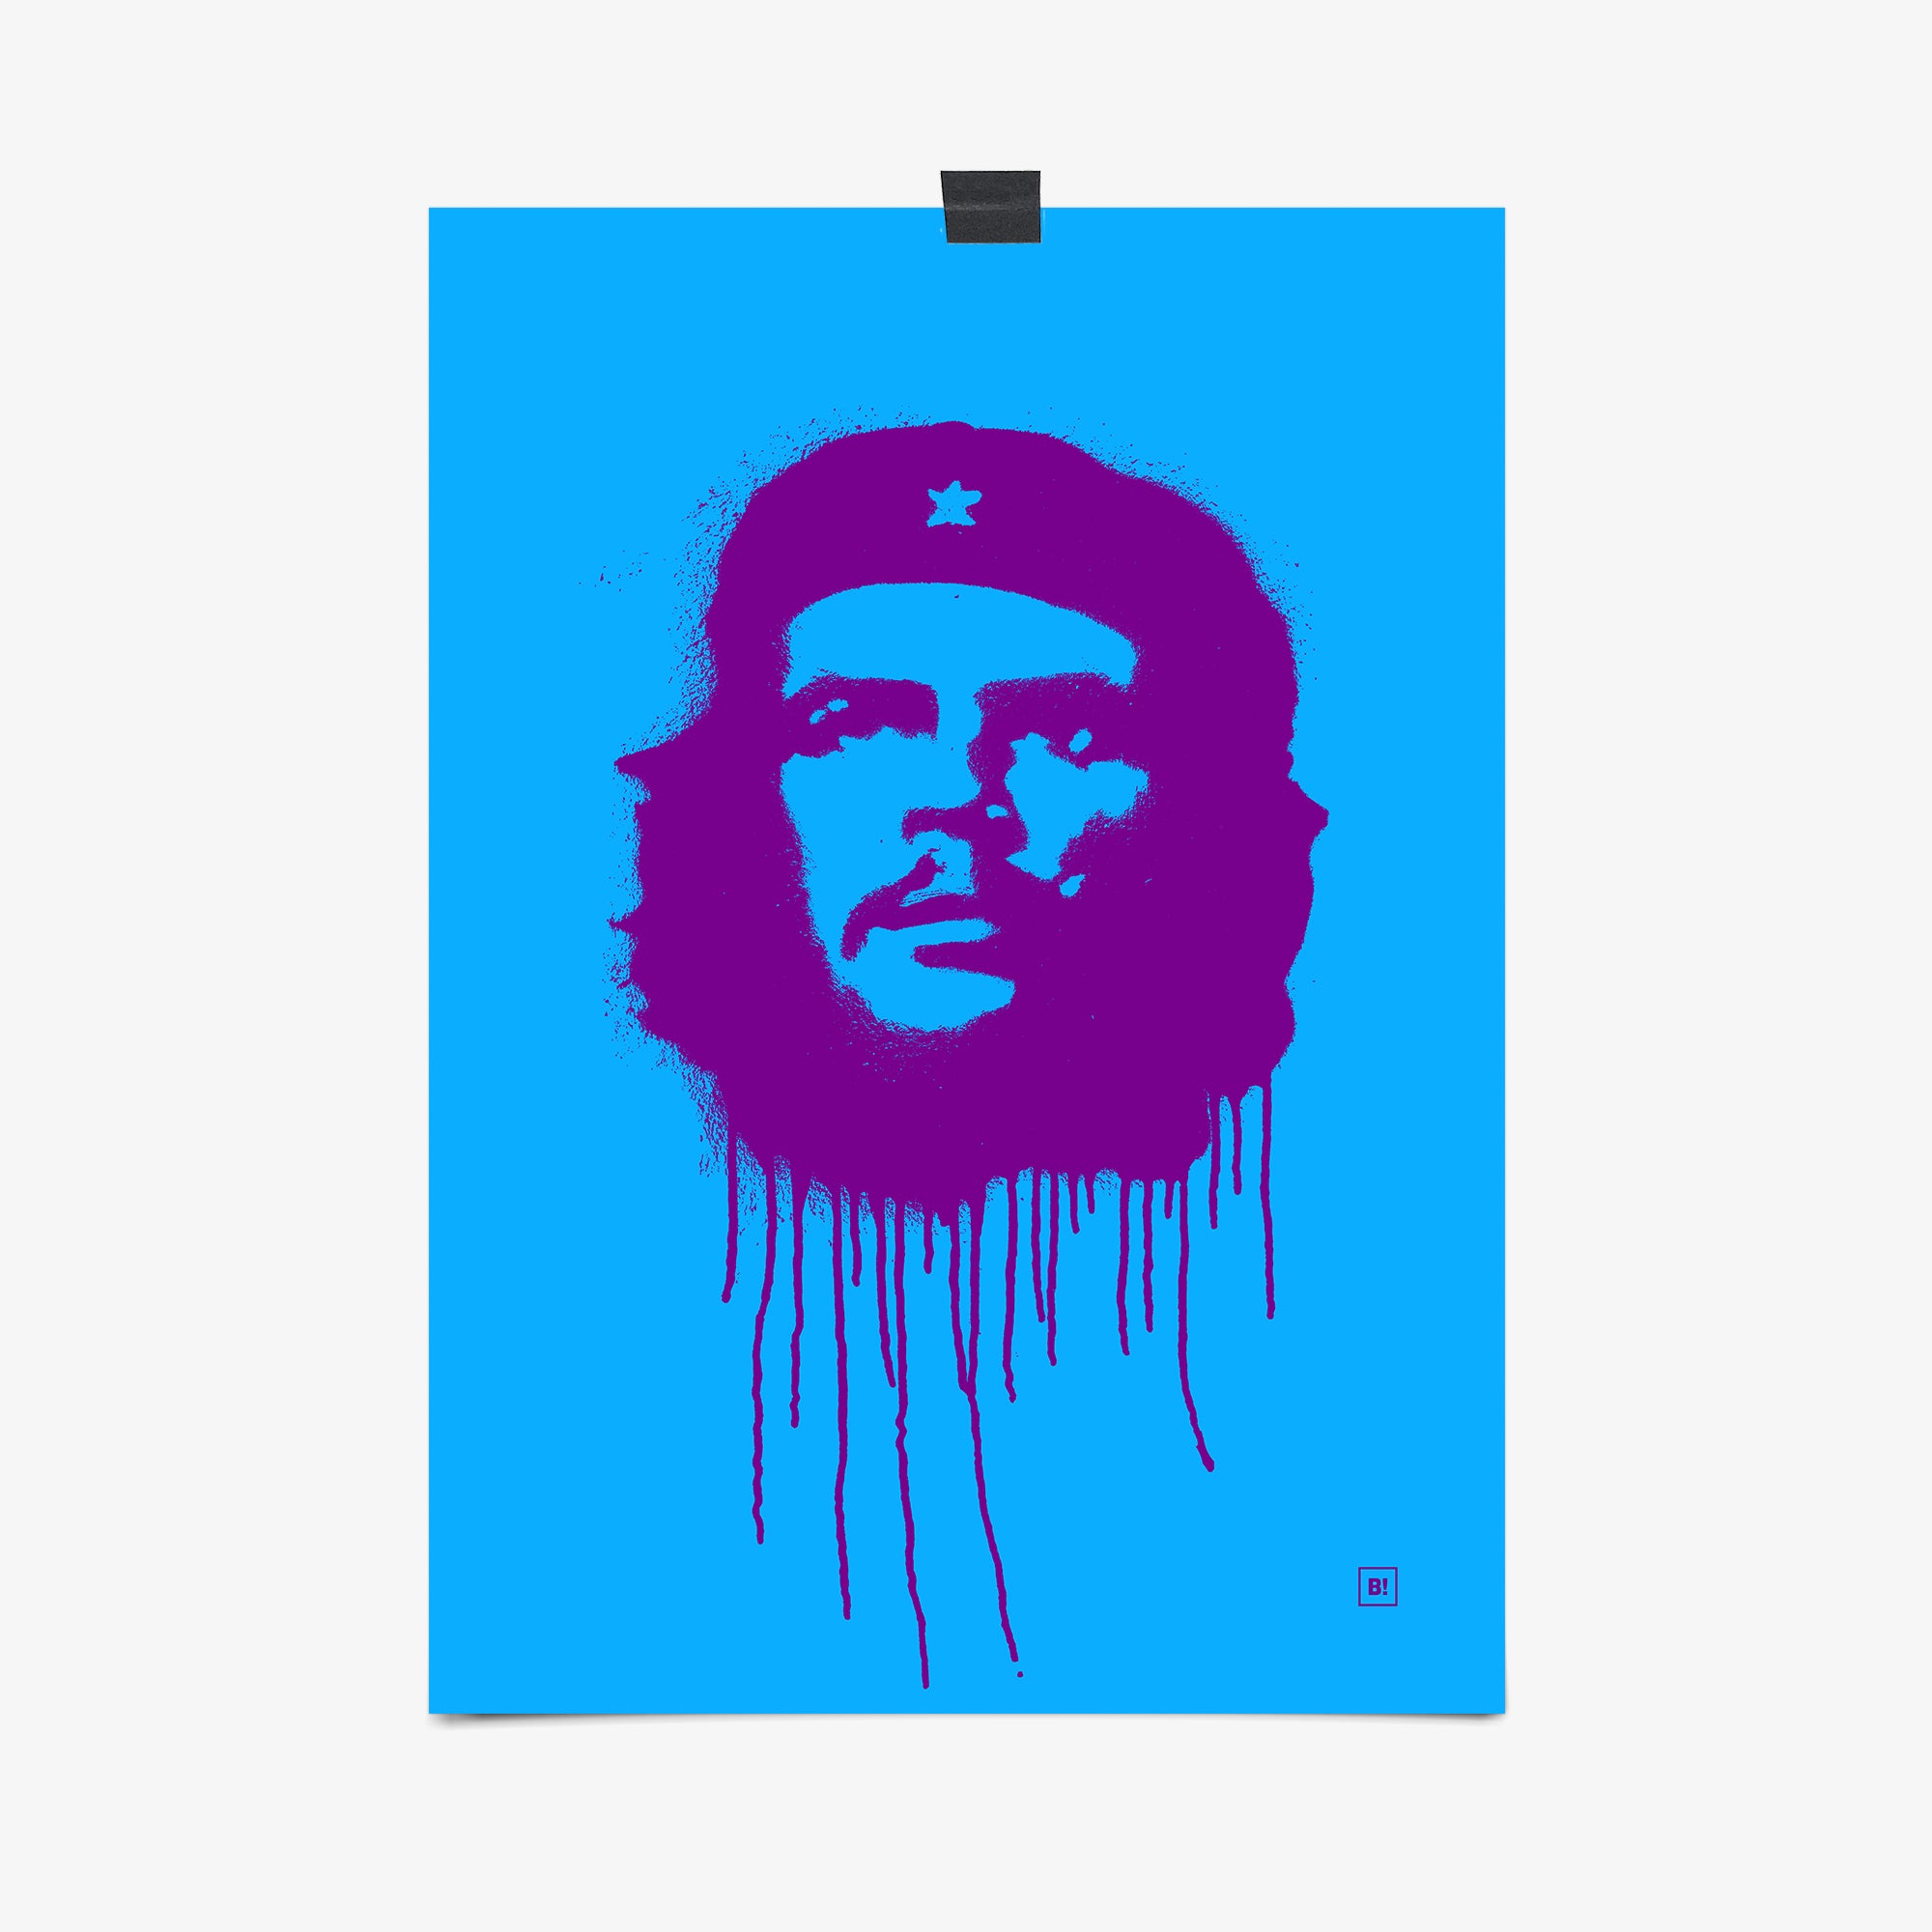 Ernesto Che Guevara hand-drawn illustration vector image, Ernesto